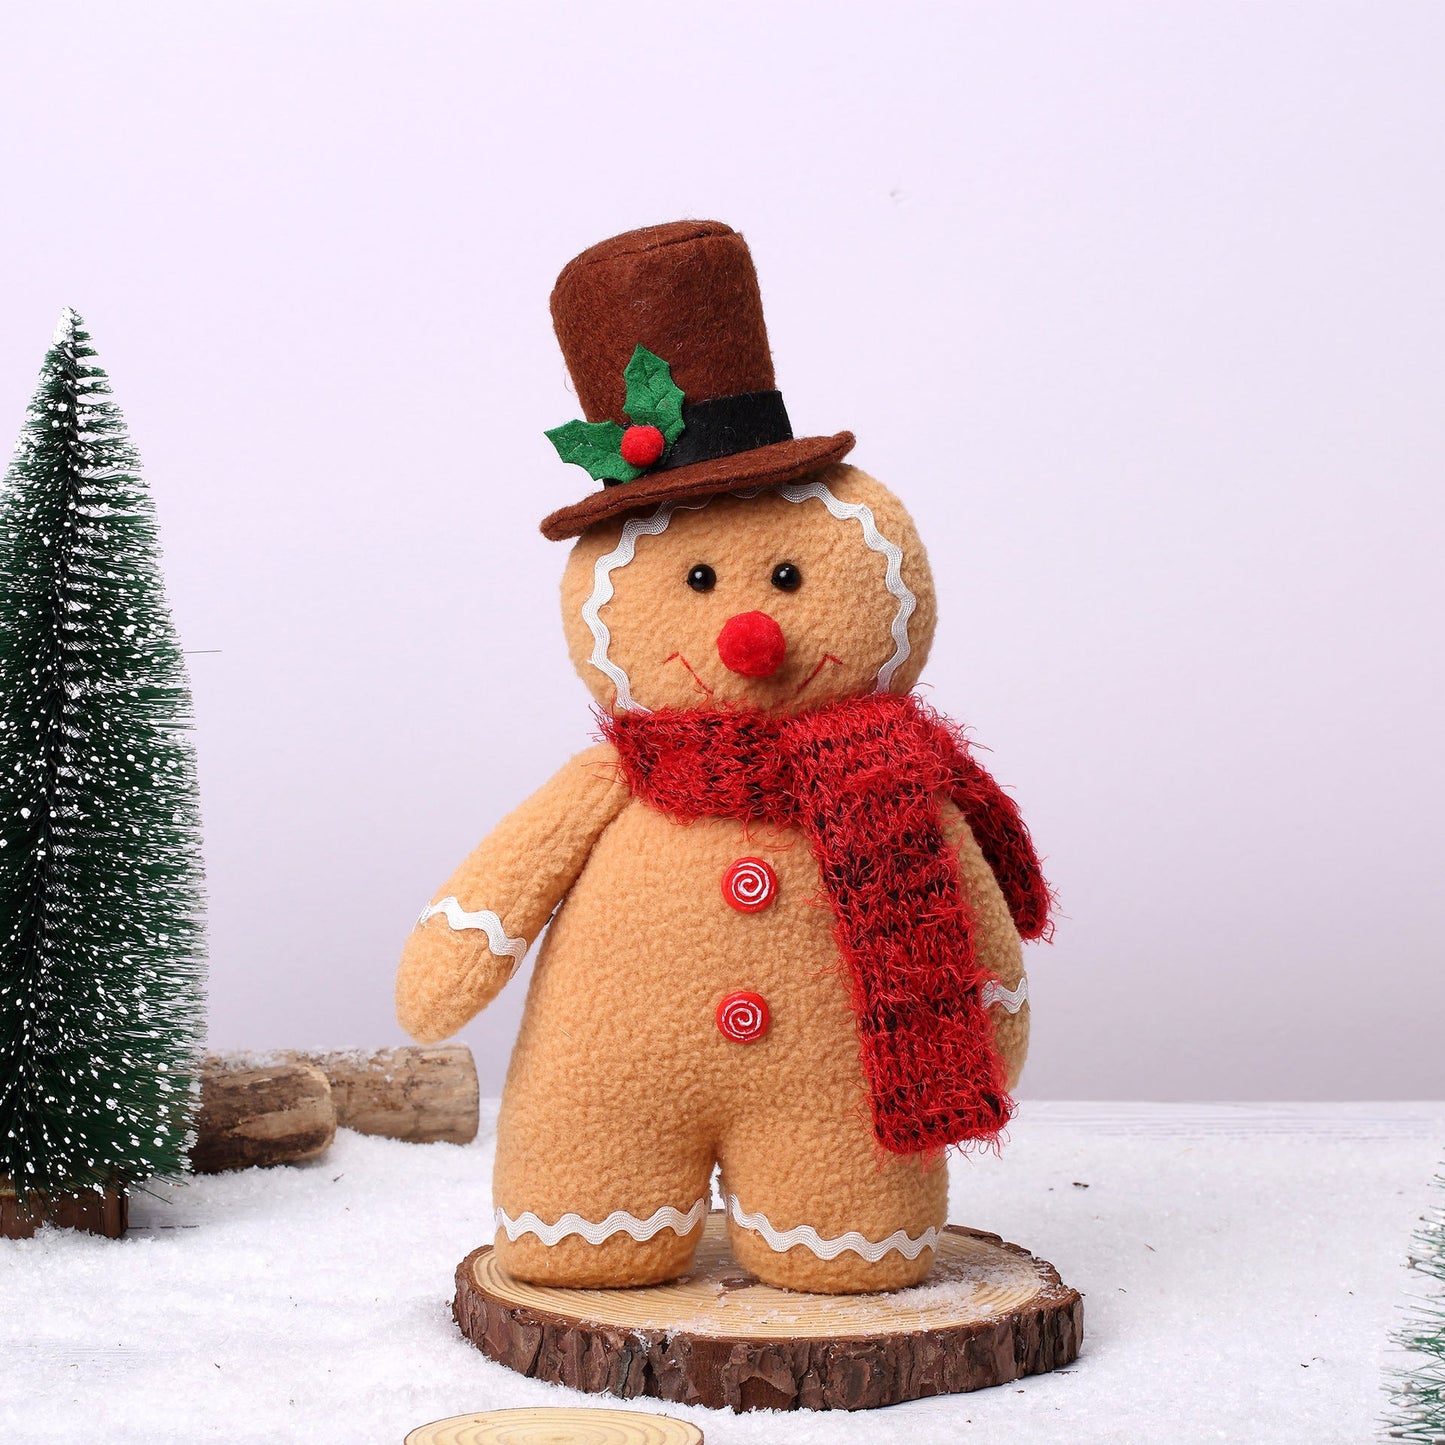 Gingerbread Man and Woman Christmas Doll - patchandbagel